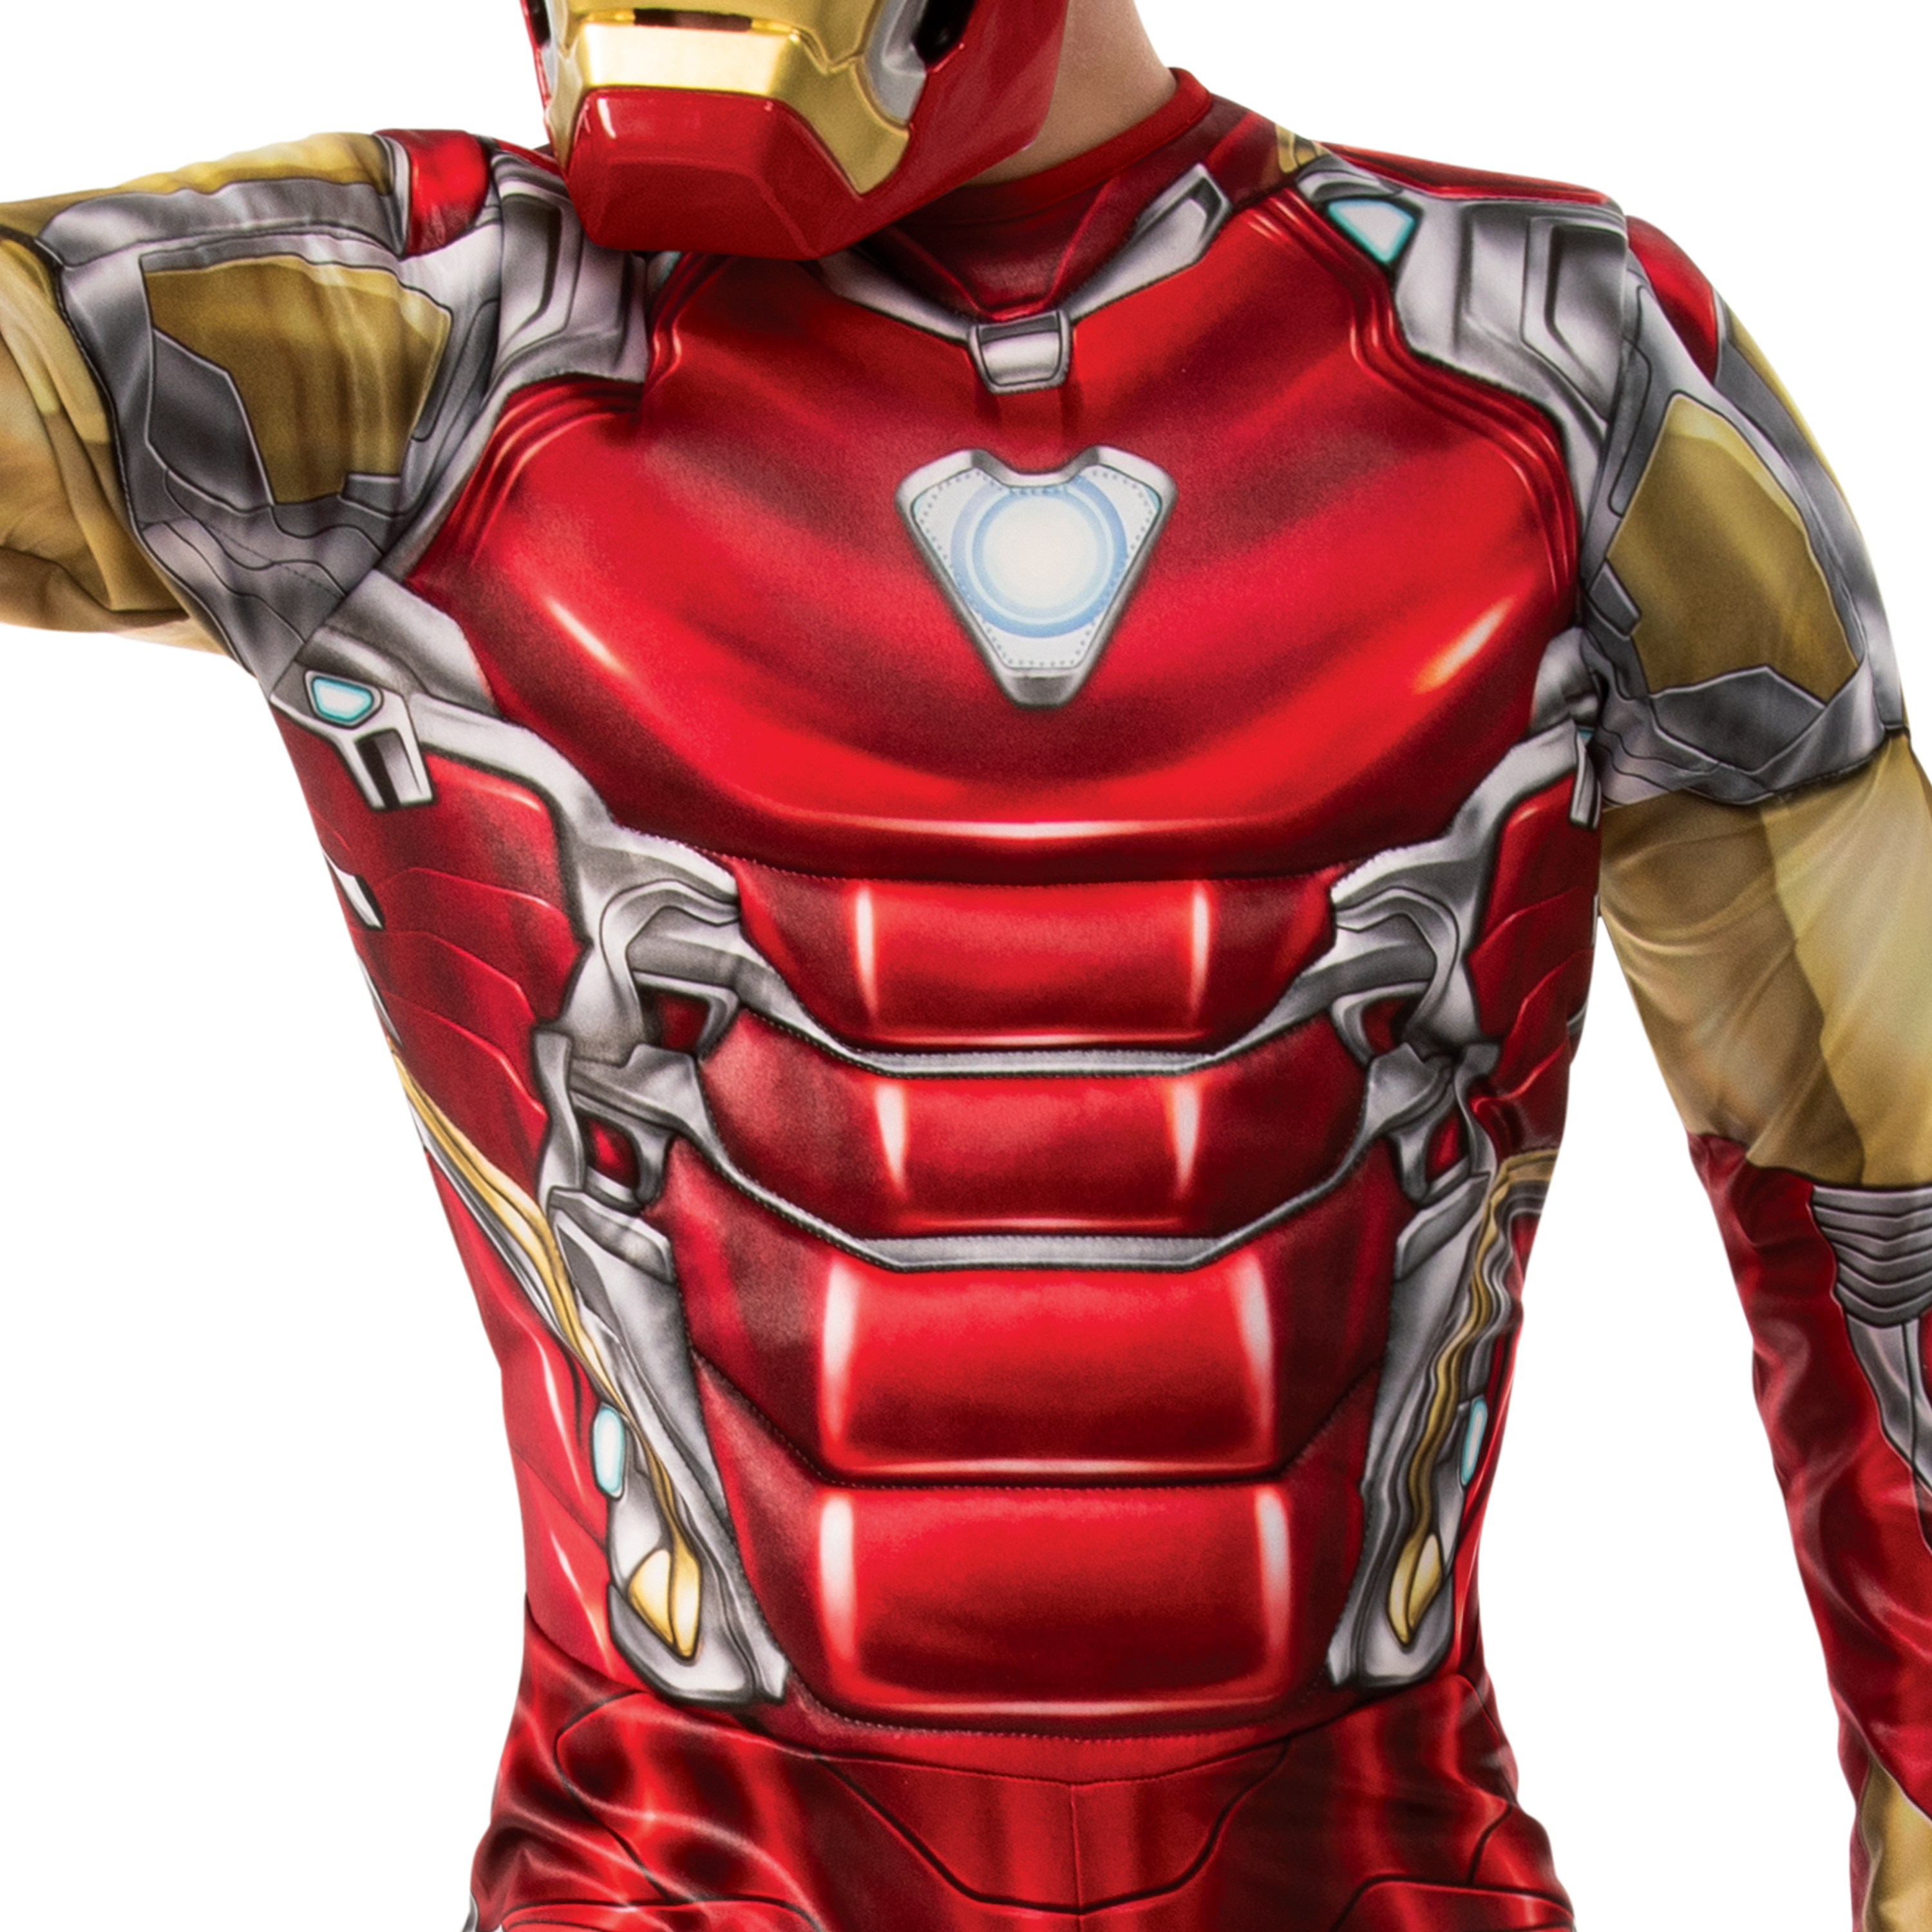 Child Officially Licensed Boys Marvel Iron Man Halloween Costume Medium, Red - image 4 of 6